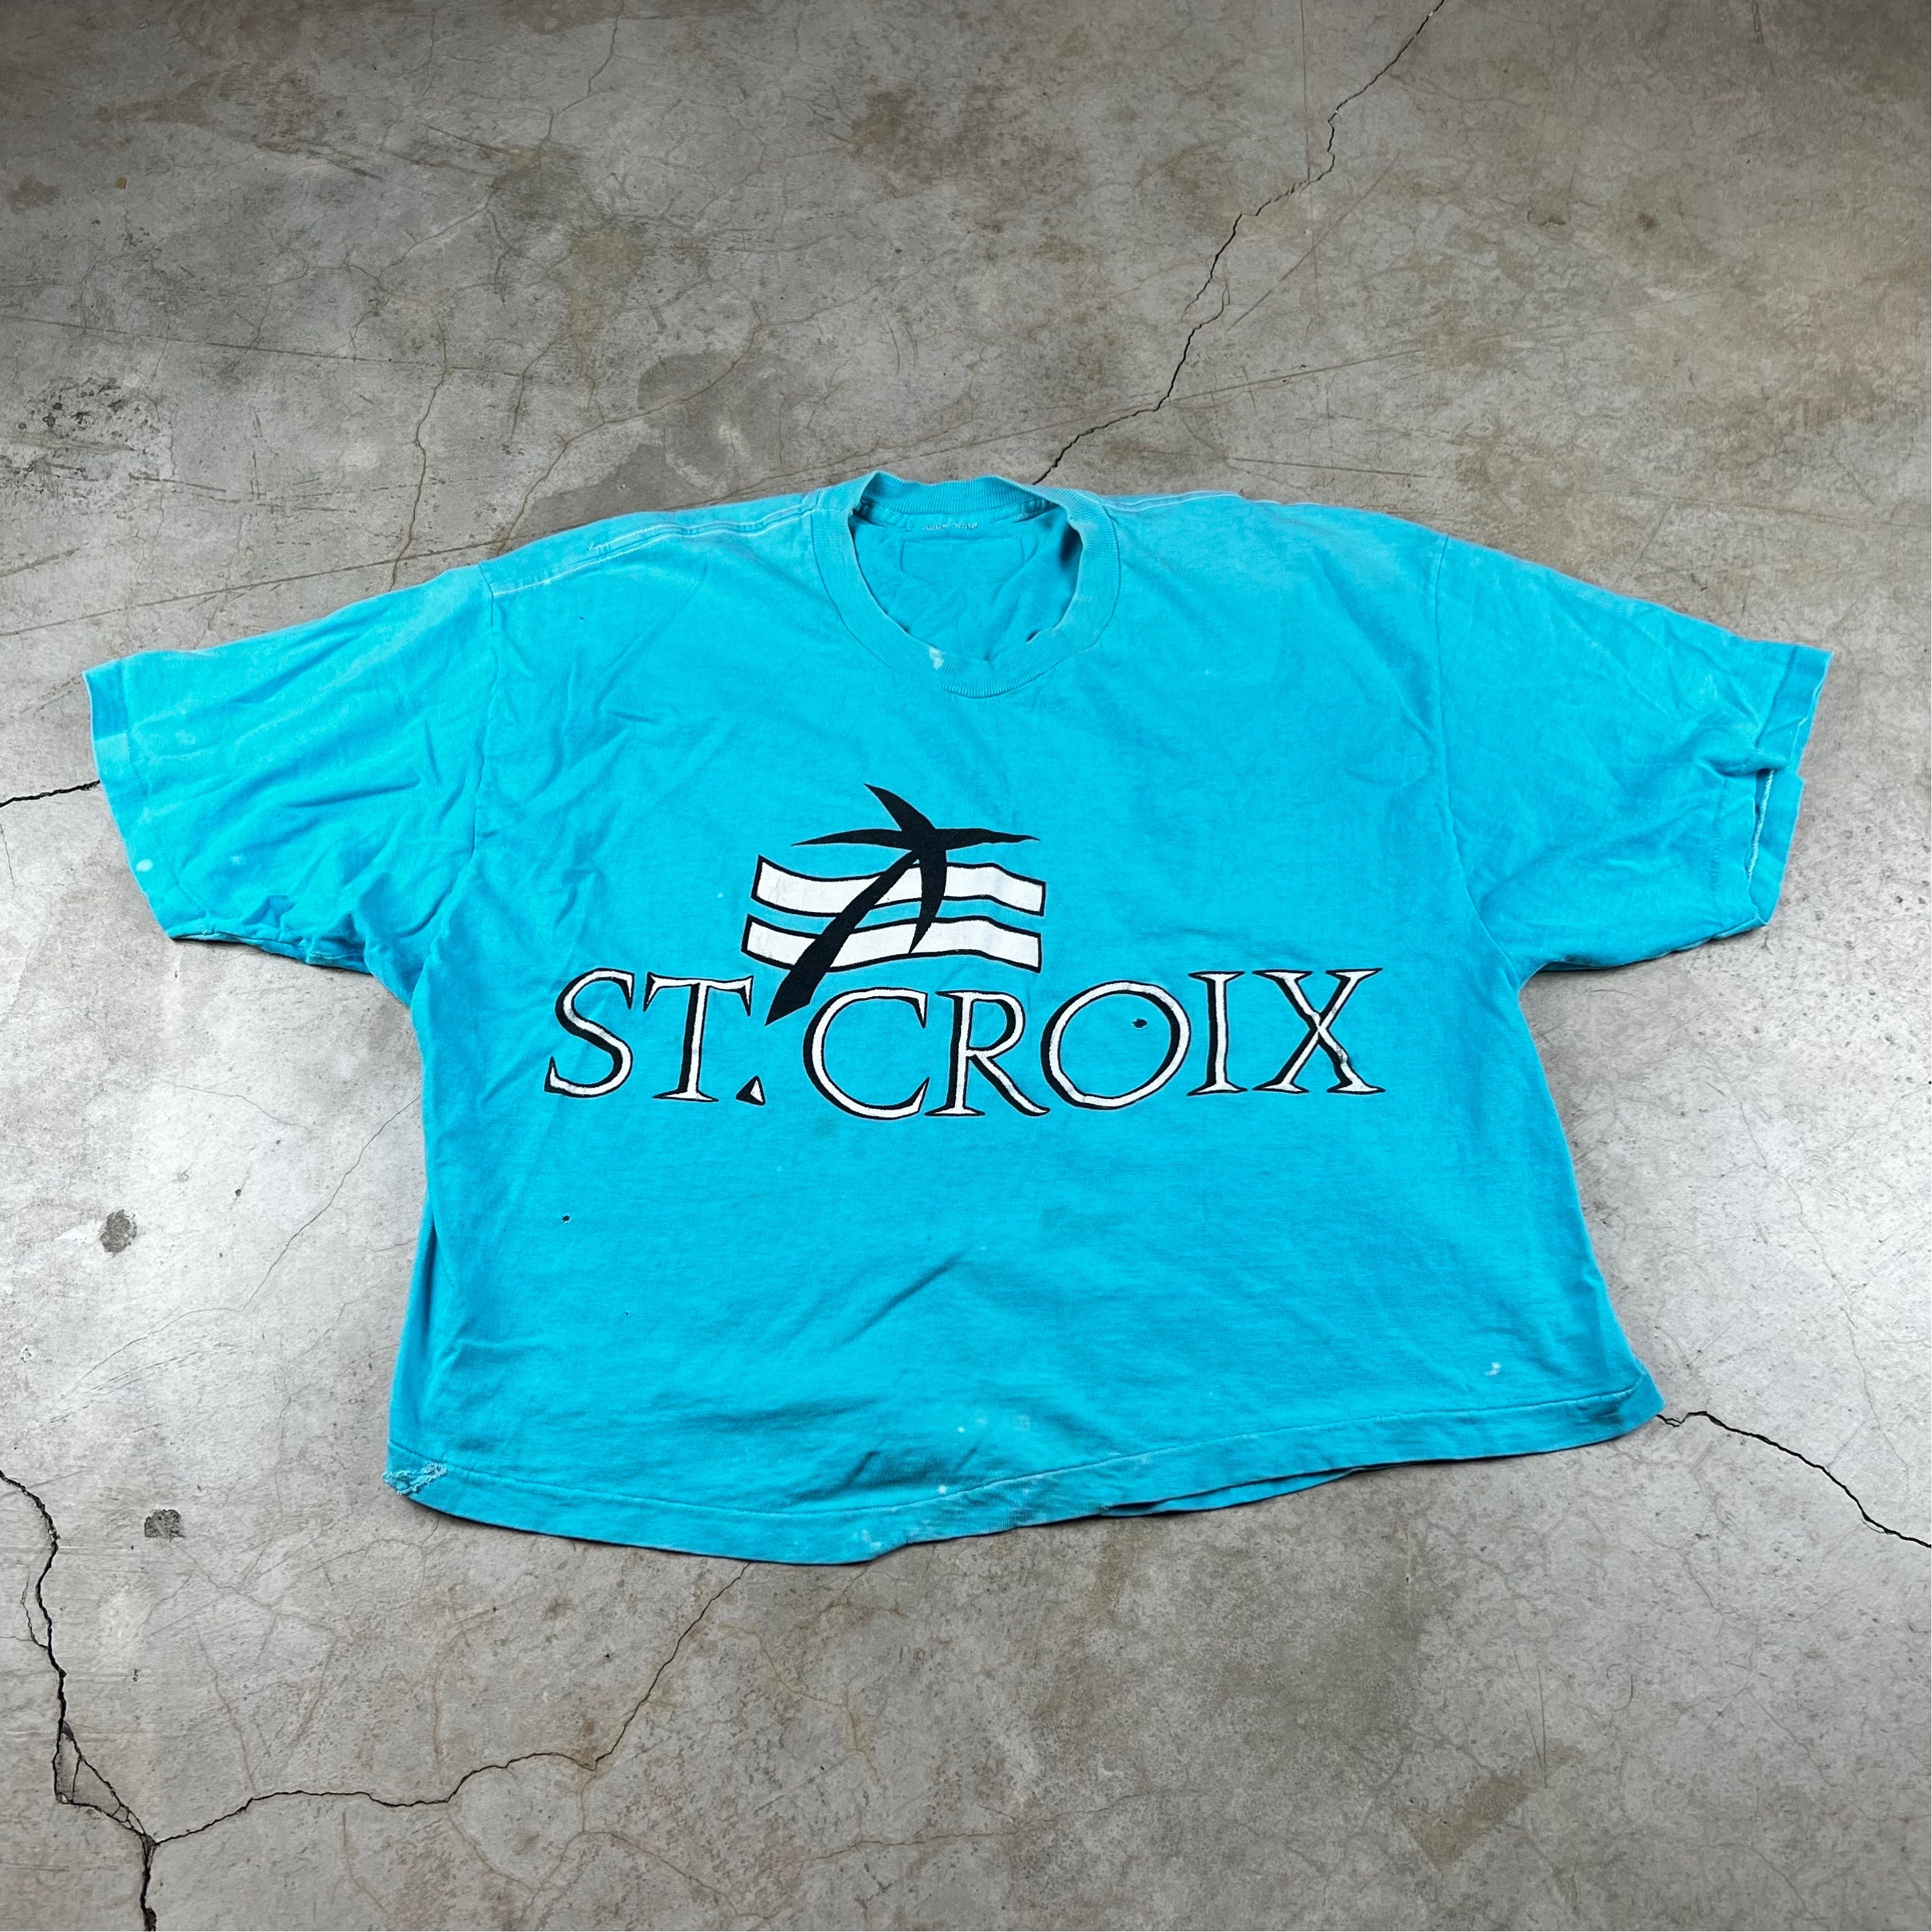 Vintage Cropped St. Croix Tee - Large - Blue - Black - Retro - 1990's - 90's - Short Sleeve